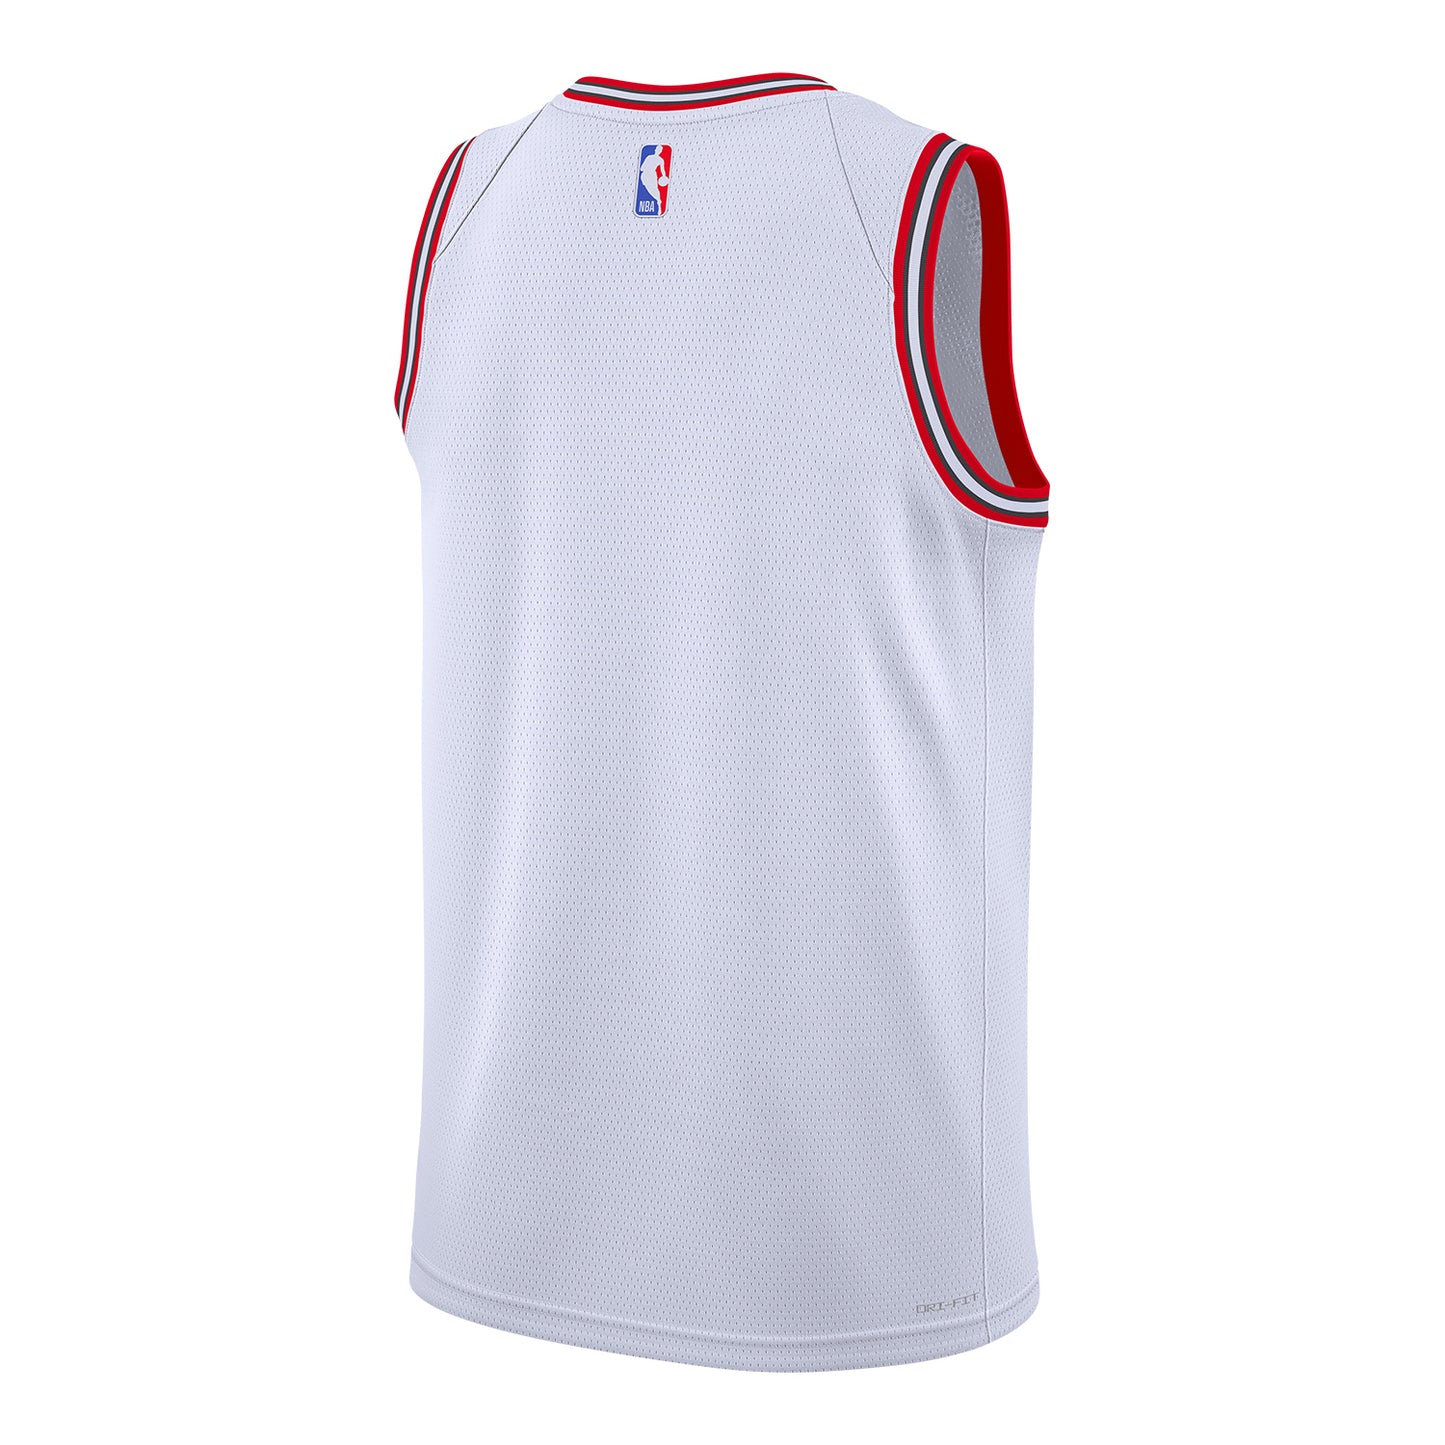 Chicago Bulls Youth Personalized Nike Association Swingman Jersey - white (back view)